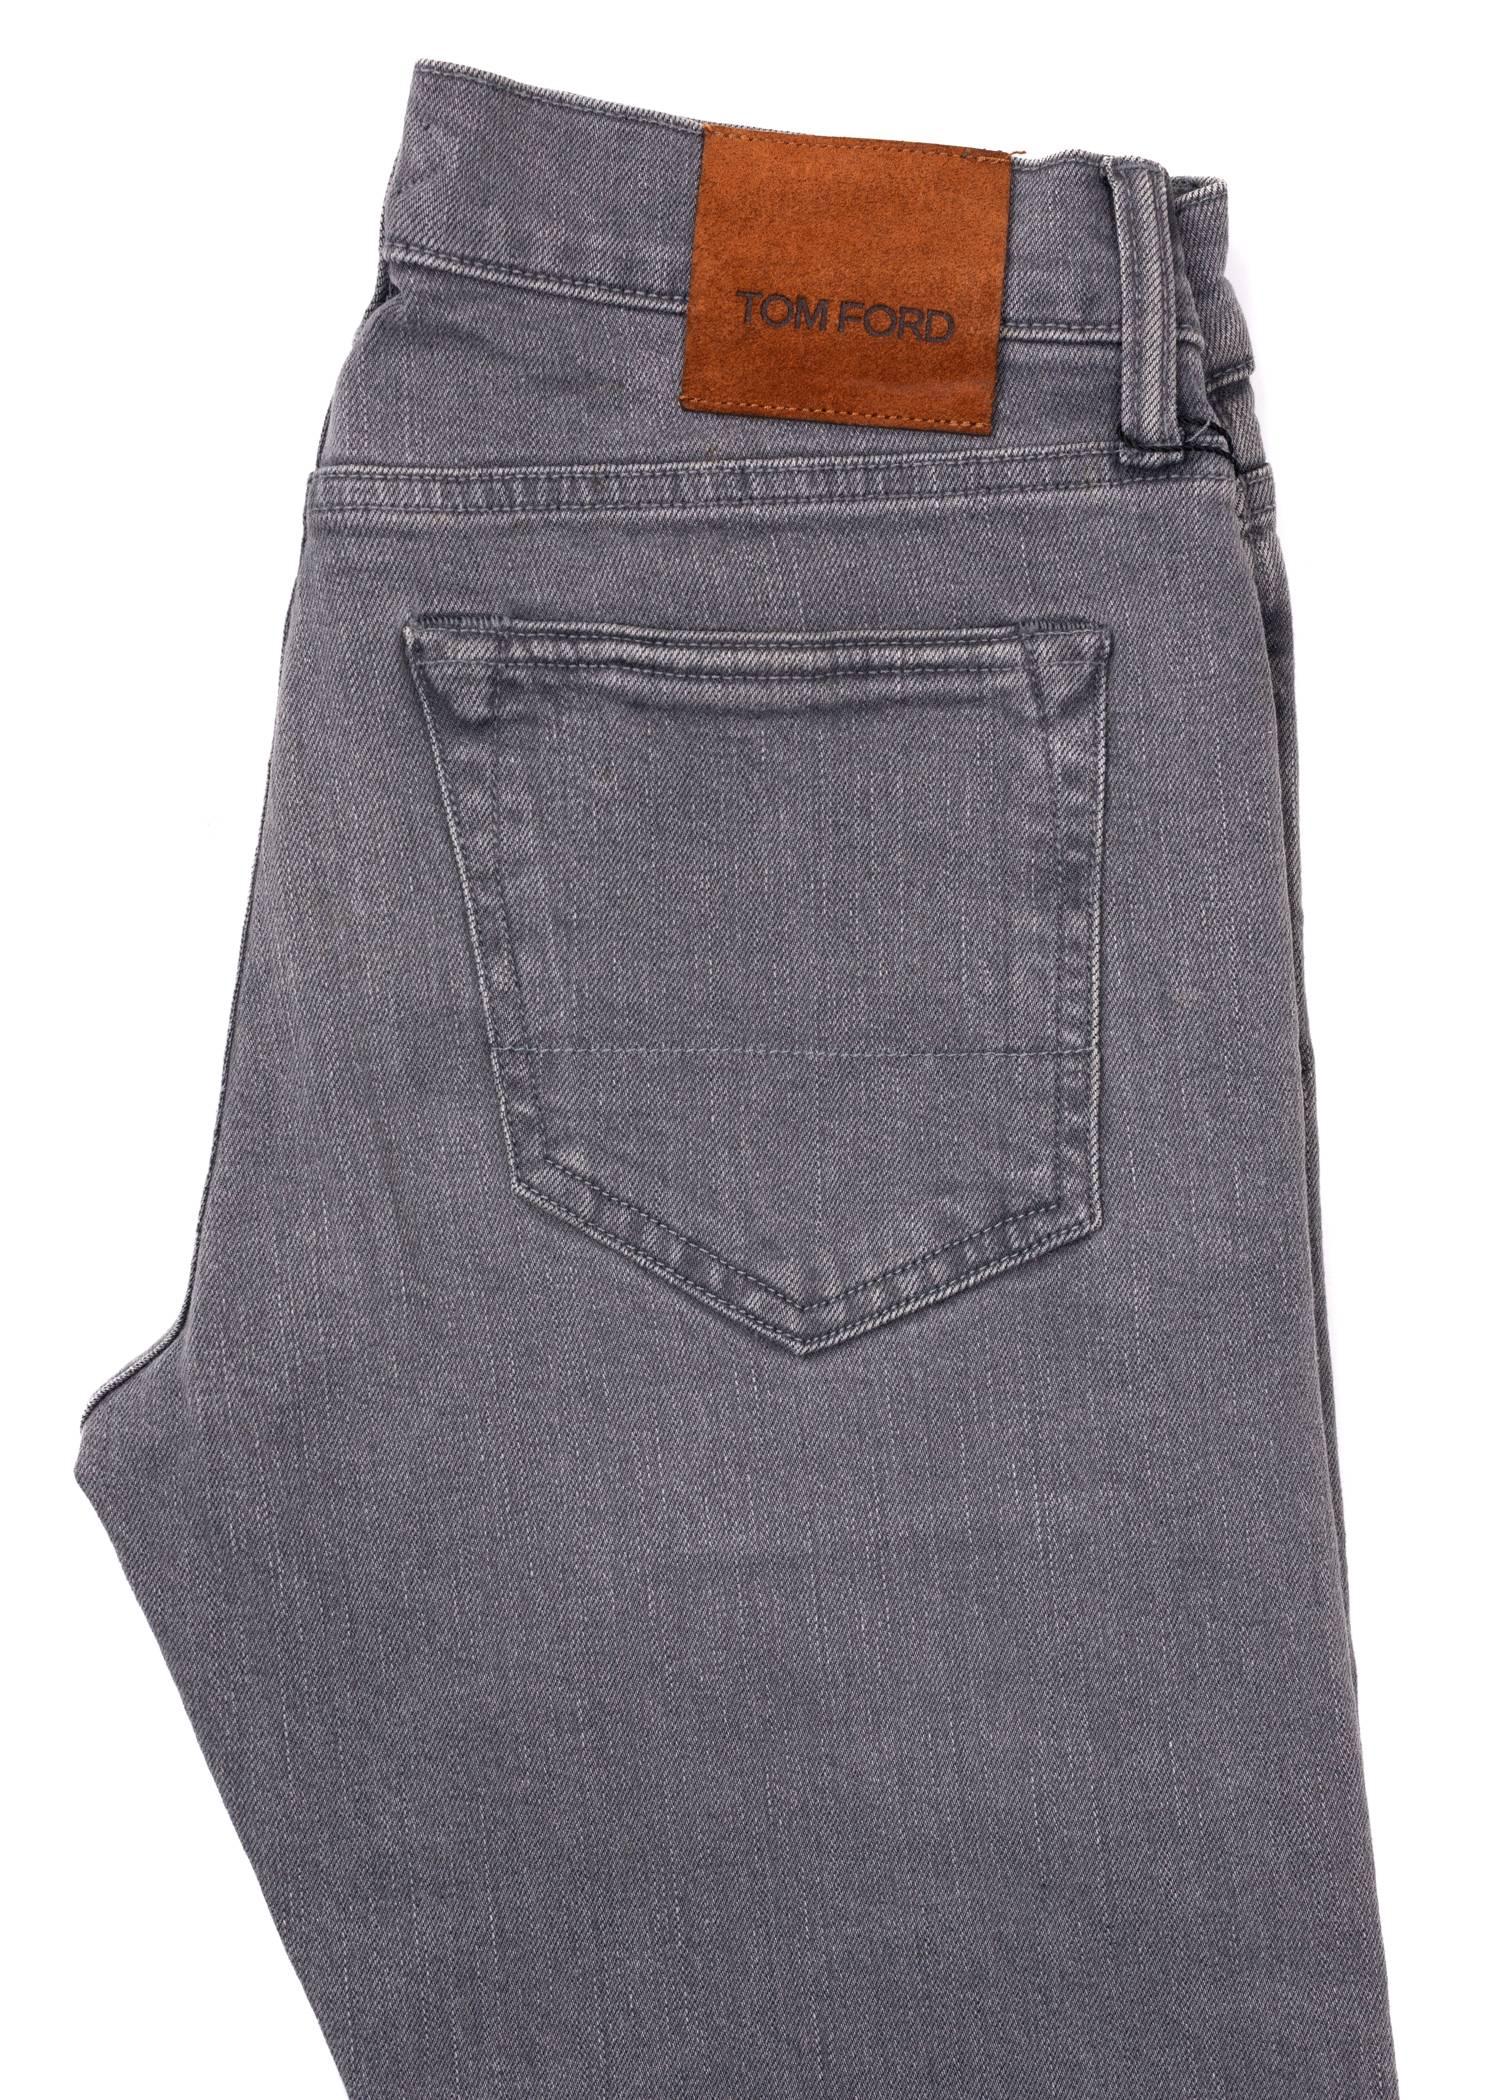 Gray Tom Ford Selvedge Denim Jeans Light Grey Wash Size 33 Regular Fit Model  